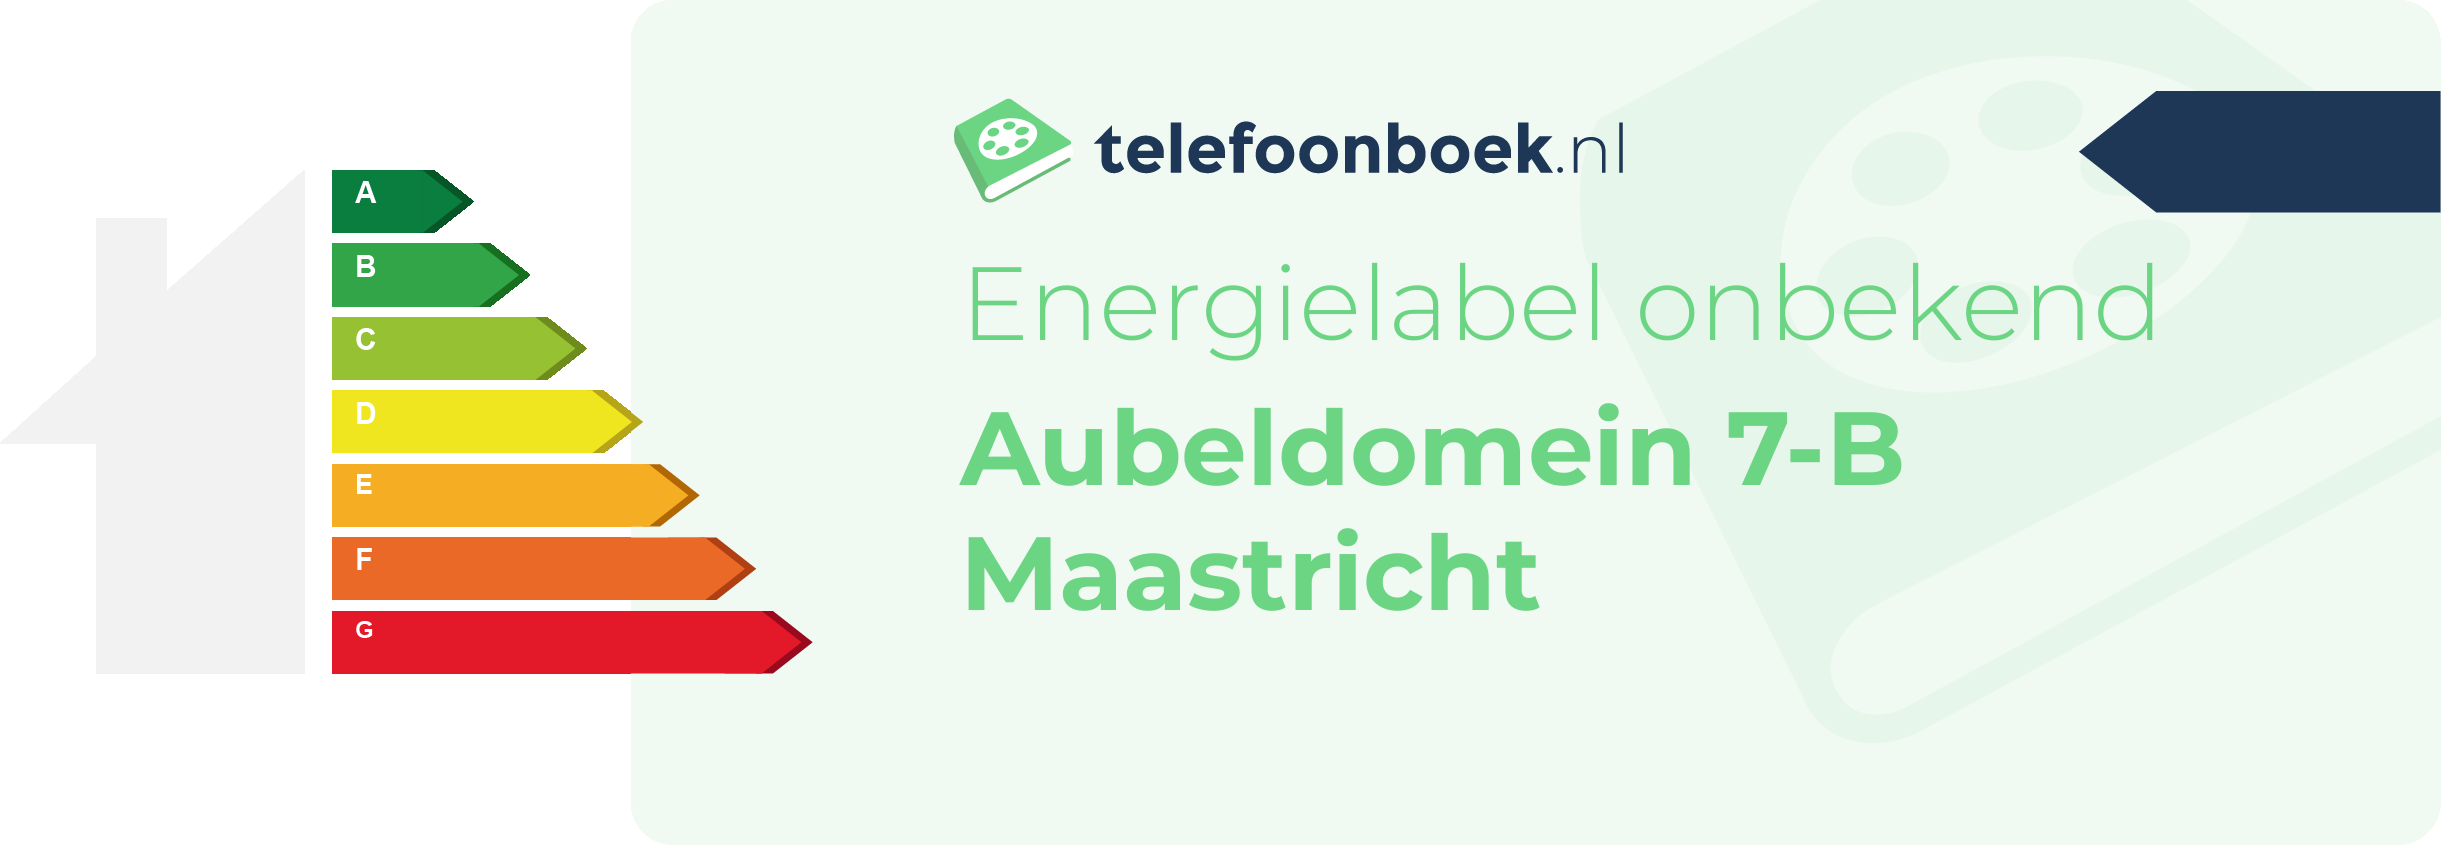 Energielabel Aubeldomein 7-B Maastricht